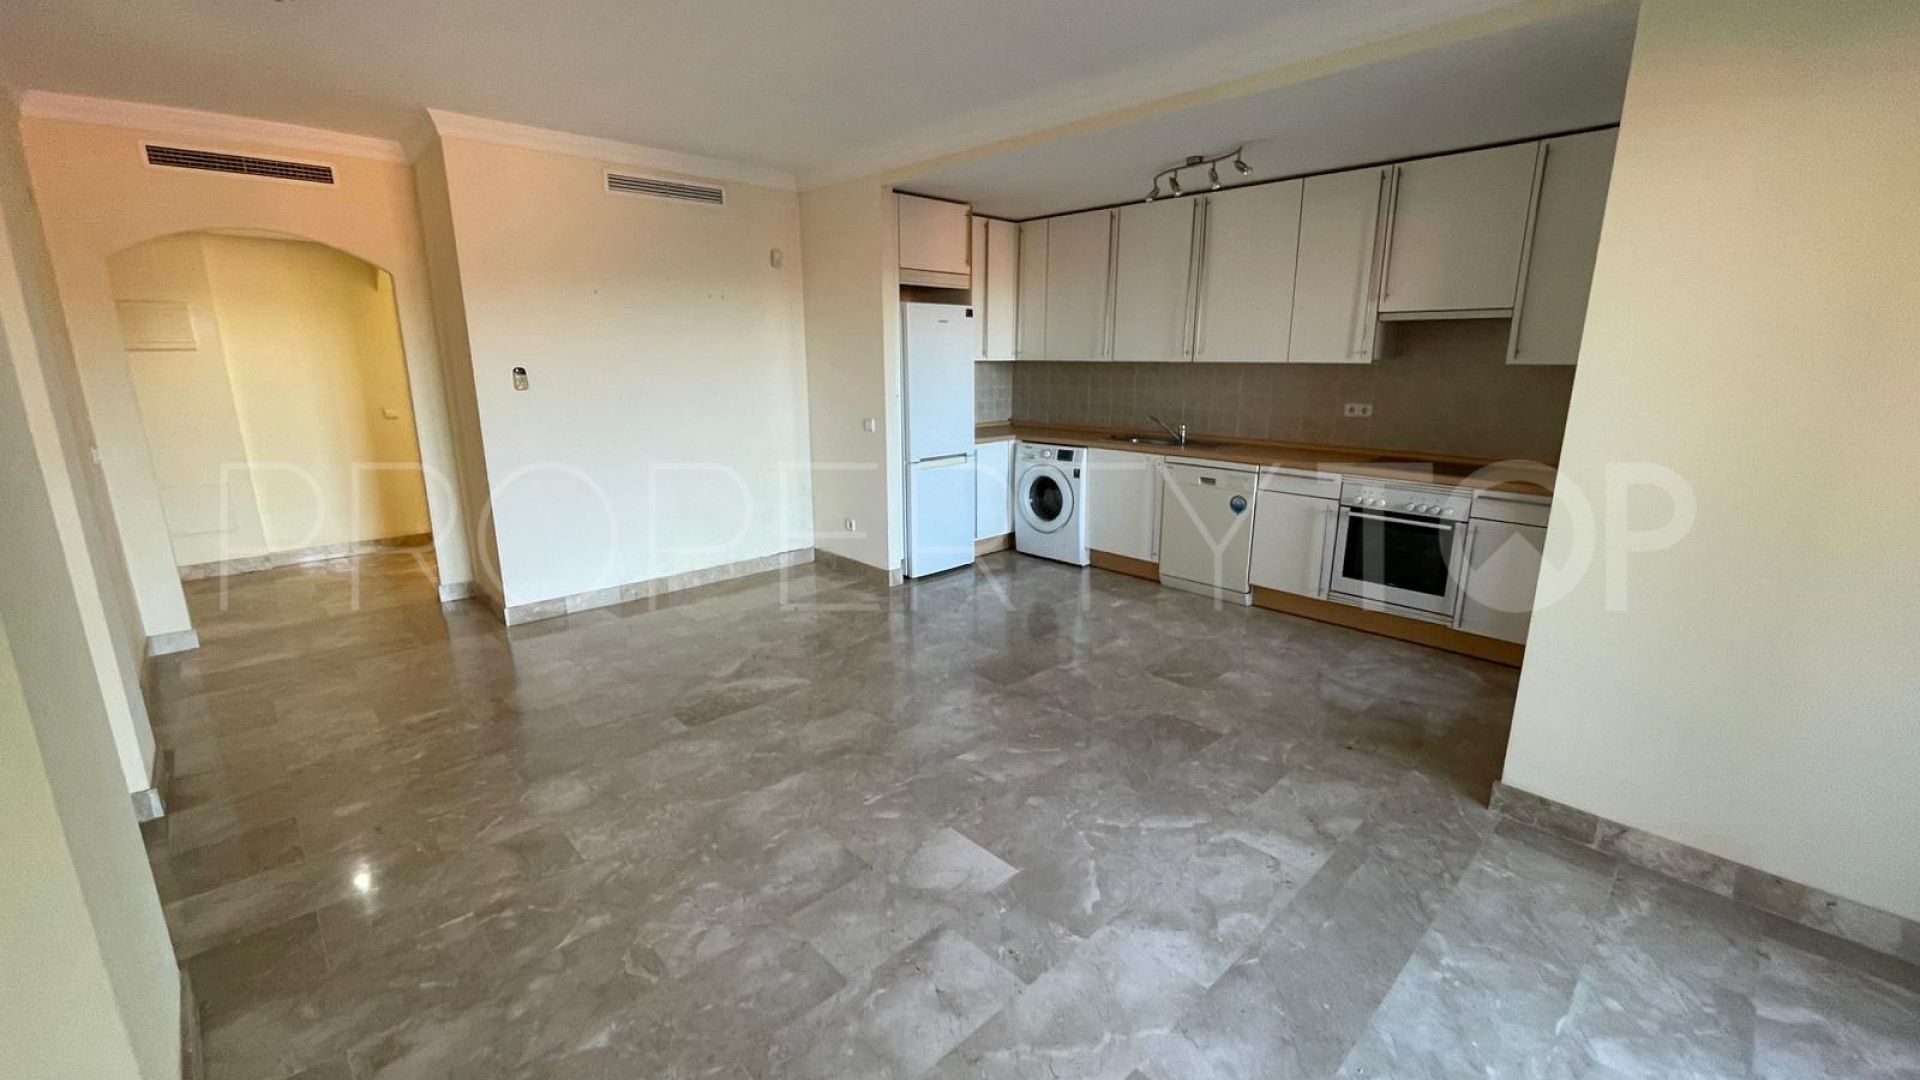 2 bedrooms ground floor apartment for sale in Costa Galera